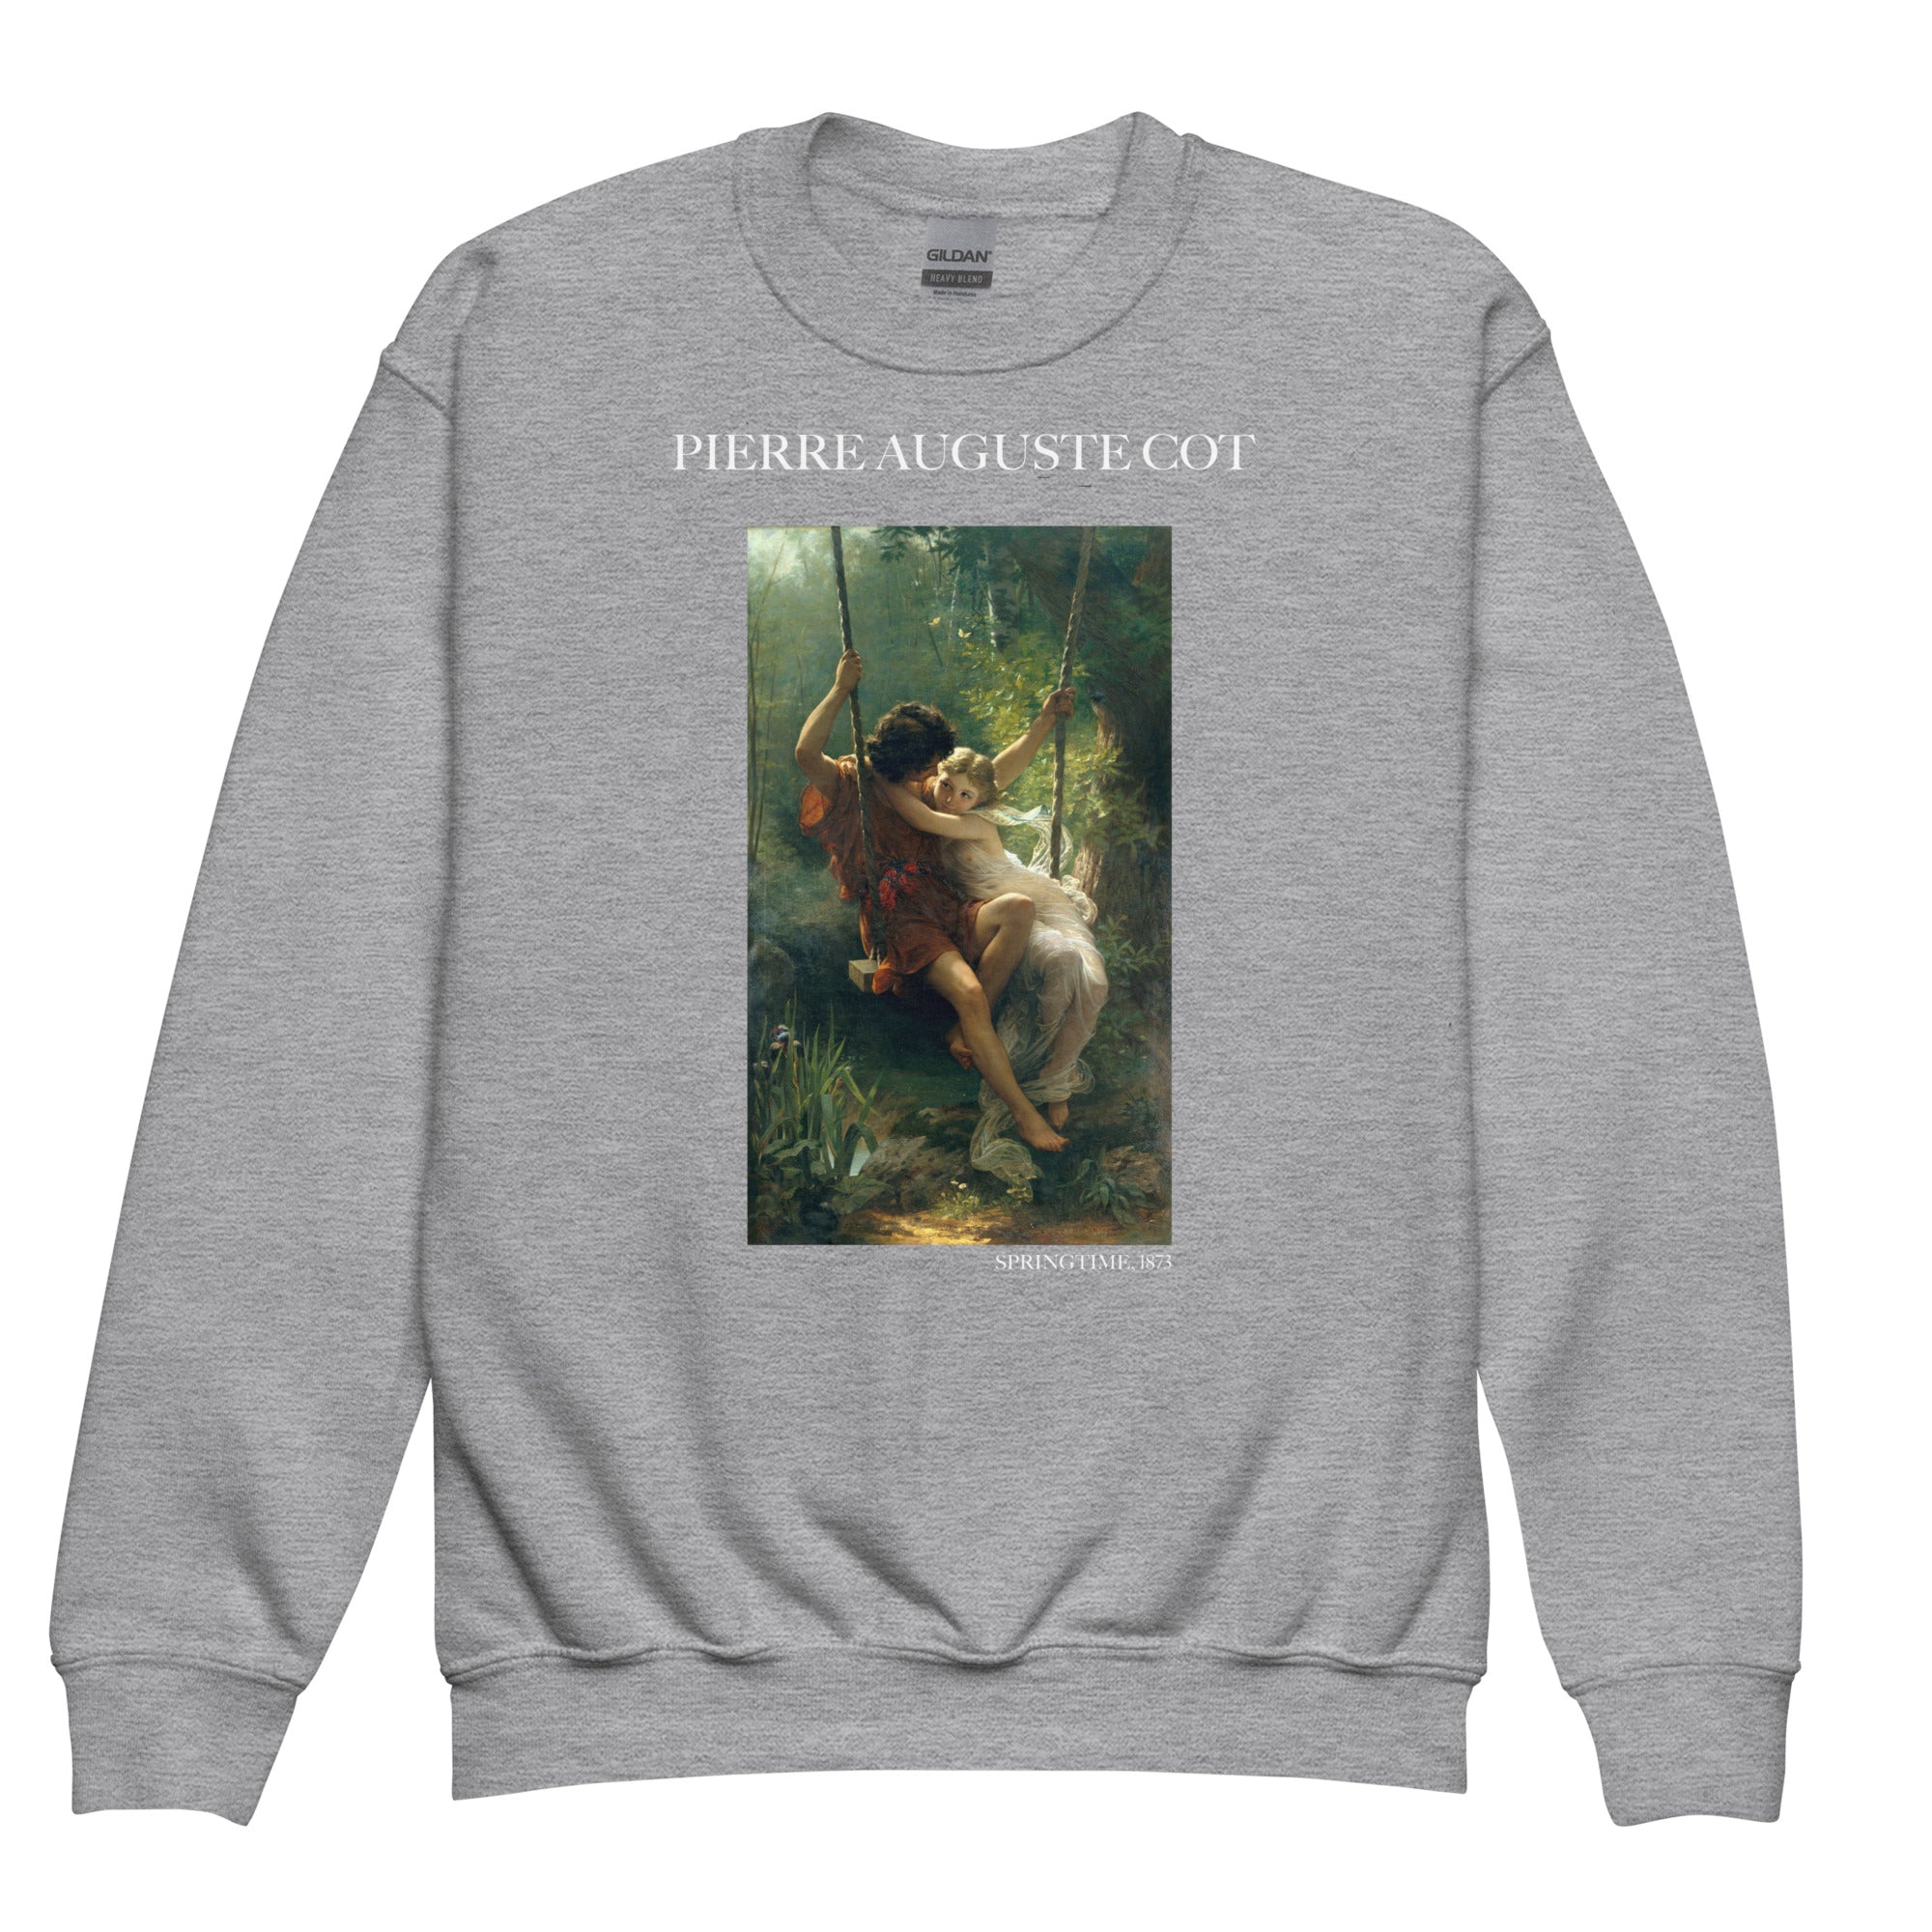 Pierre Auguste Cot 'Frühling' Berühmtes Gemälde Rundhals-Sweatshirt | Premium Jugend Kunst Sweatshirt